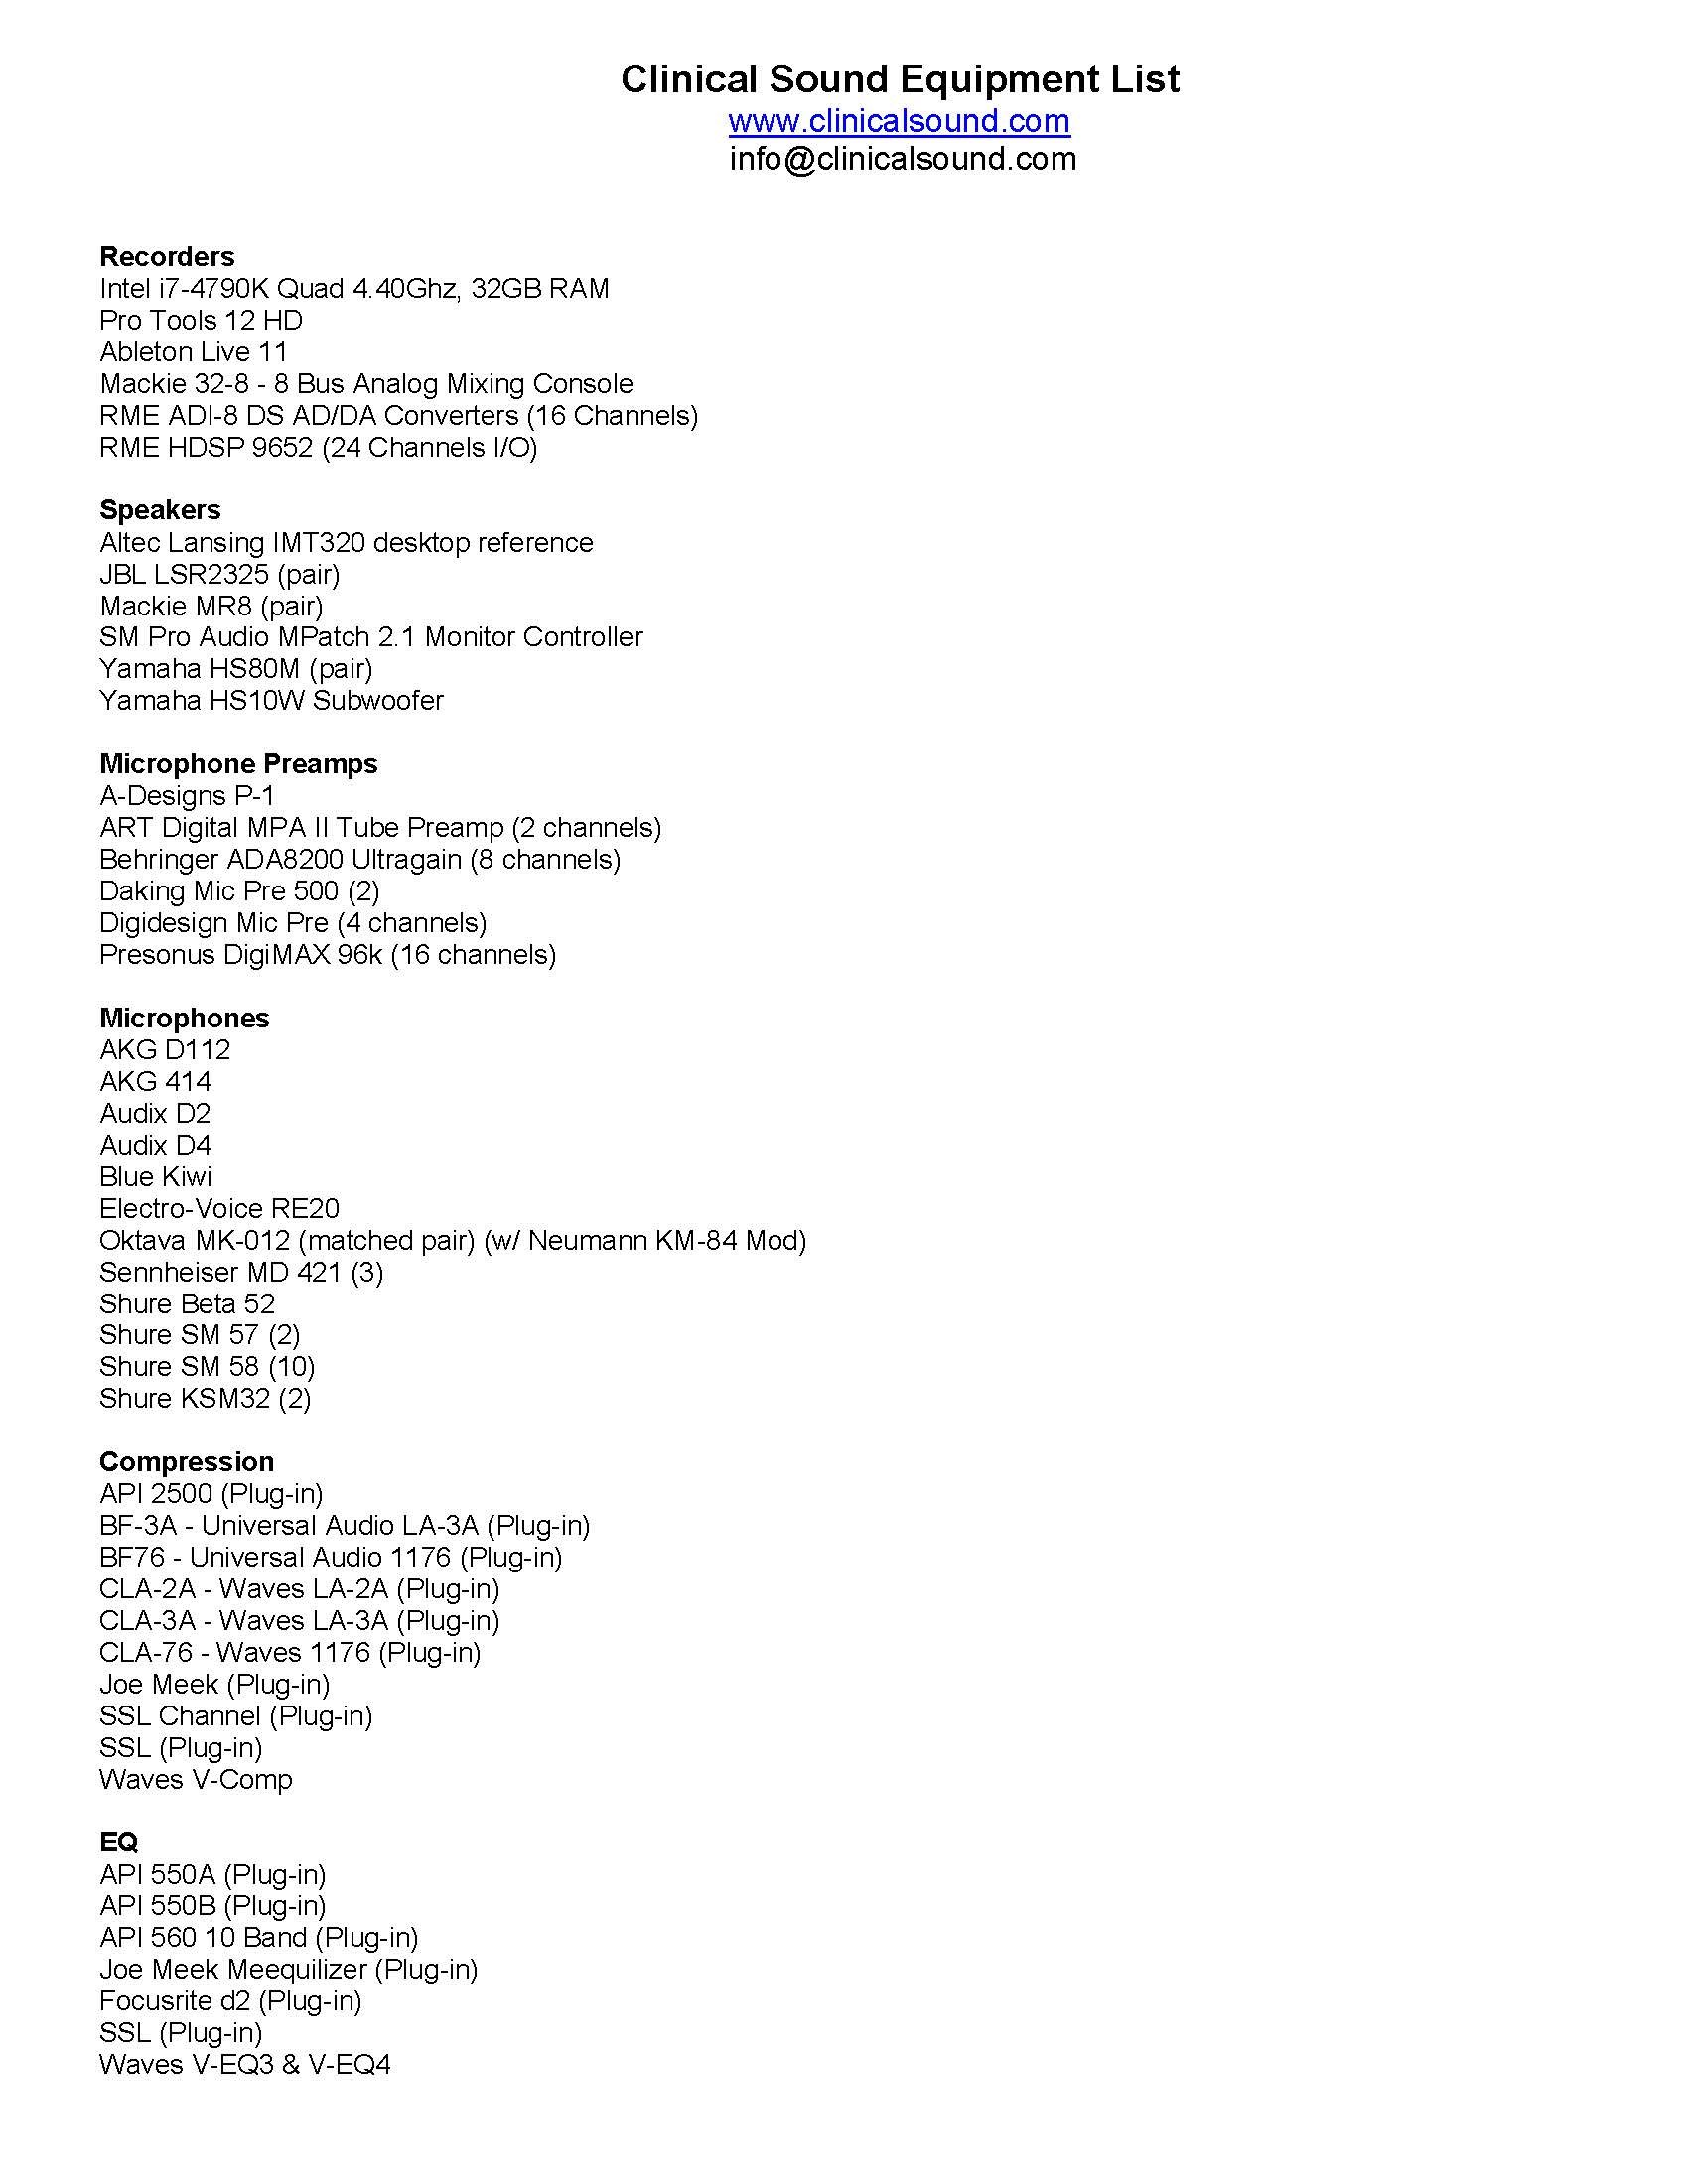 Clincal Sound Equipment List 12.21.22_Page_1.jpg